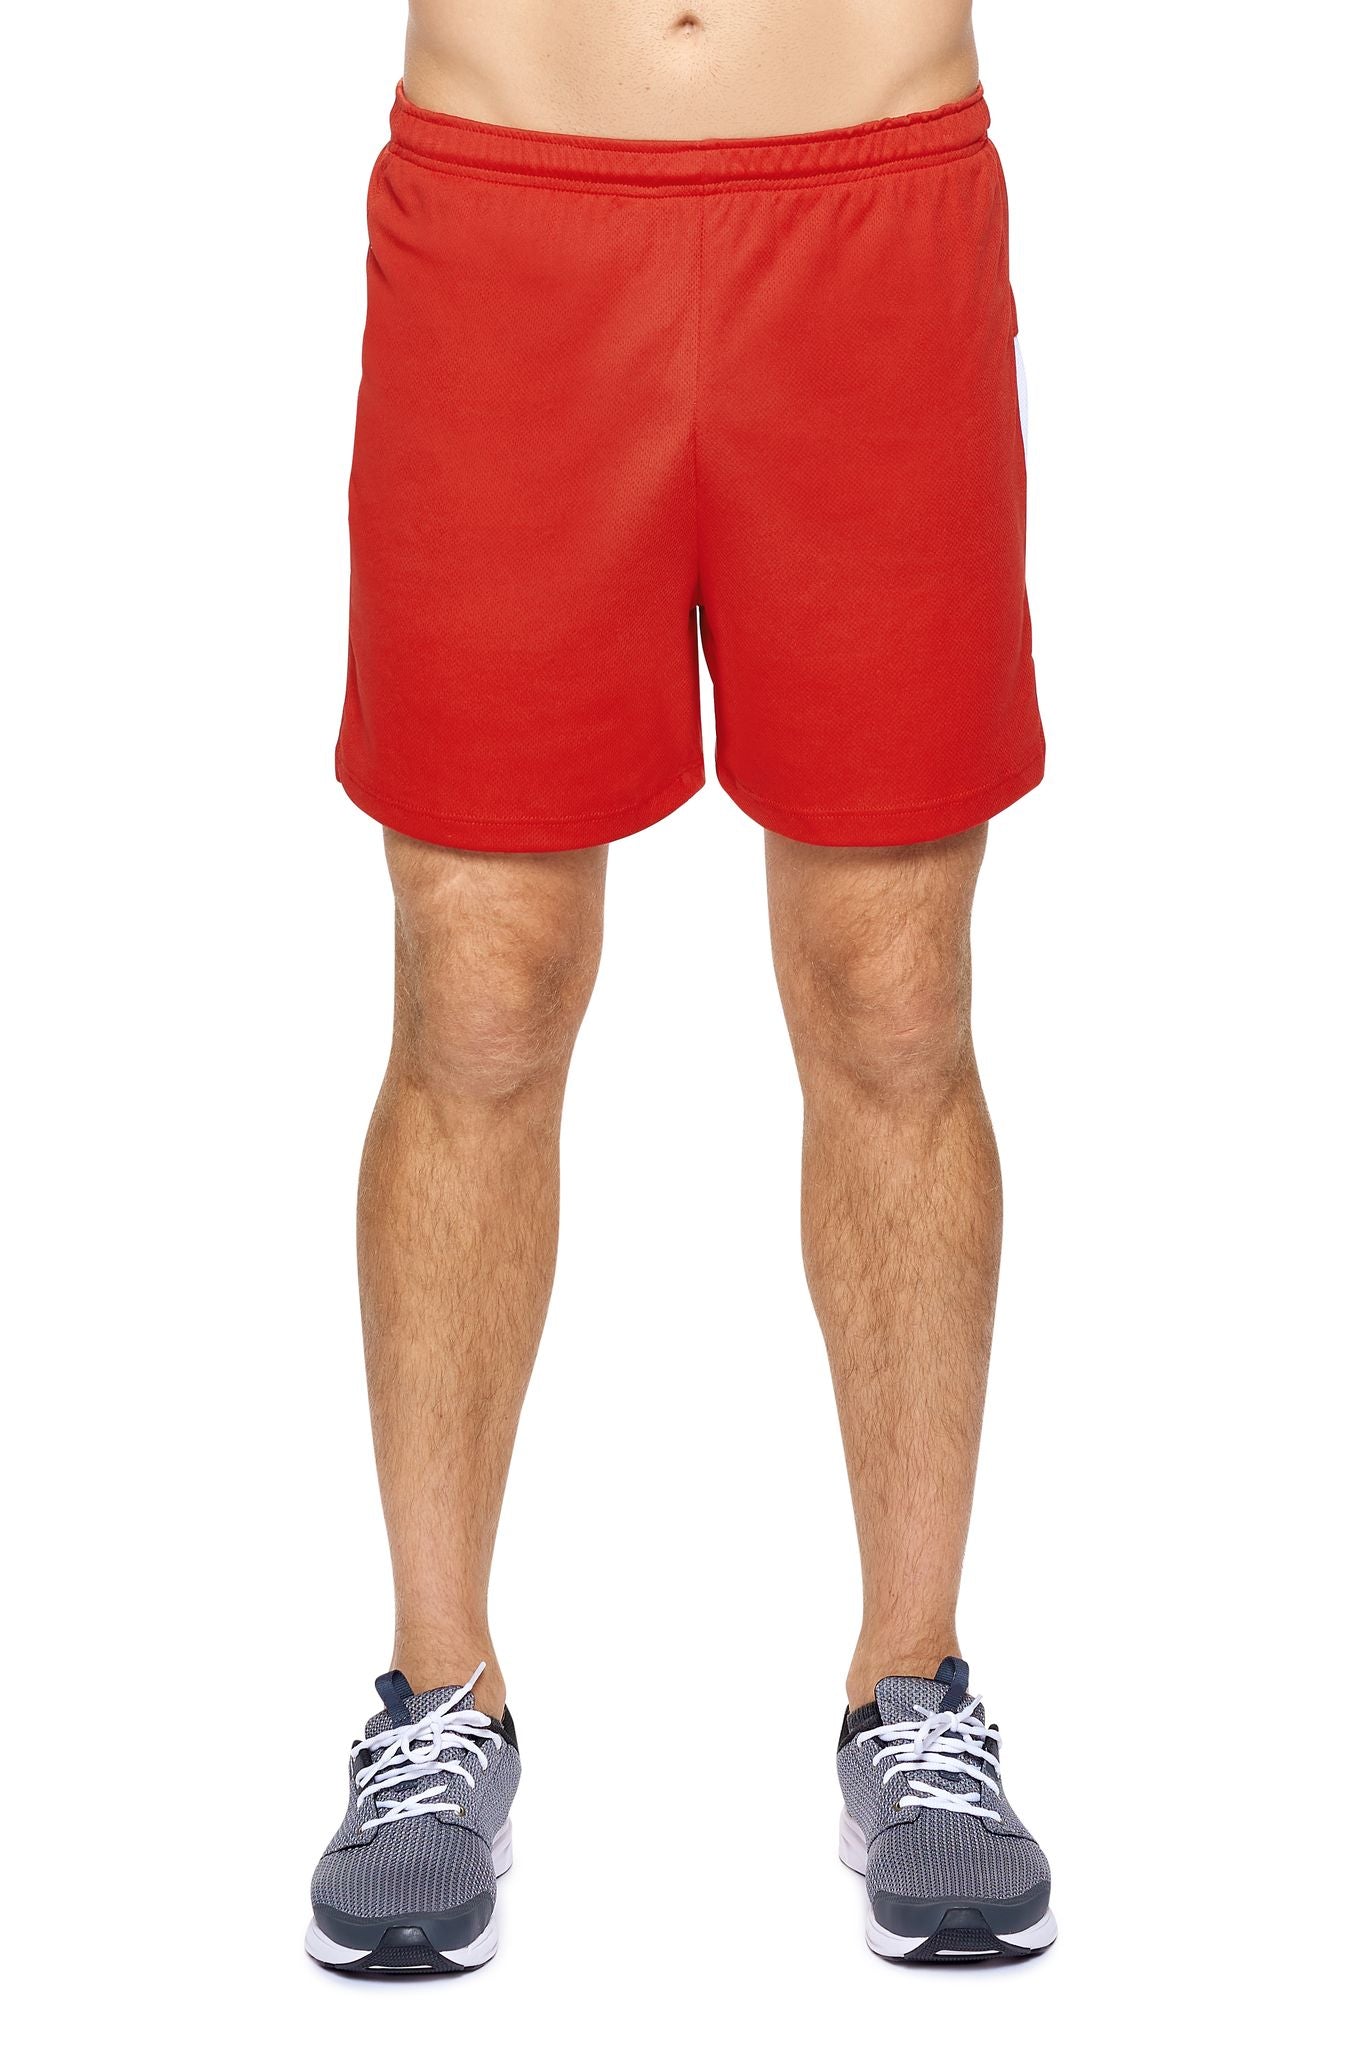 AJ1090🇺🇸 Oxymesh™ Premium Shorts - Expert Brand #true-red